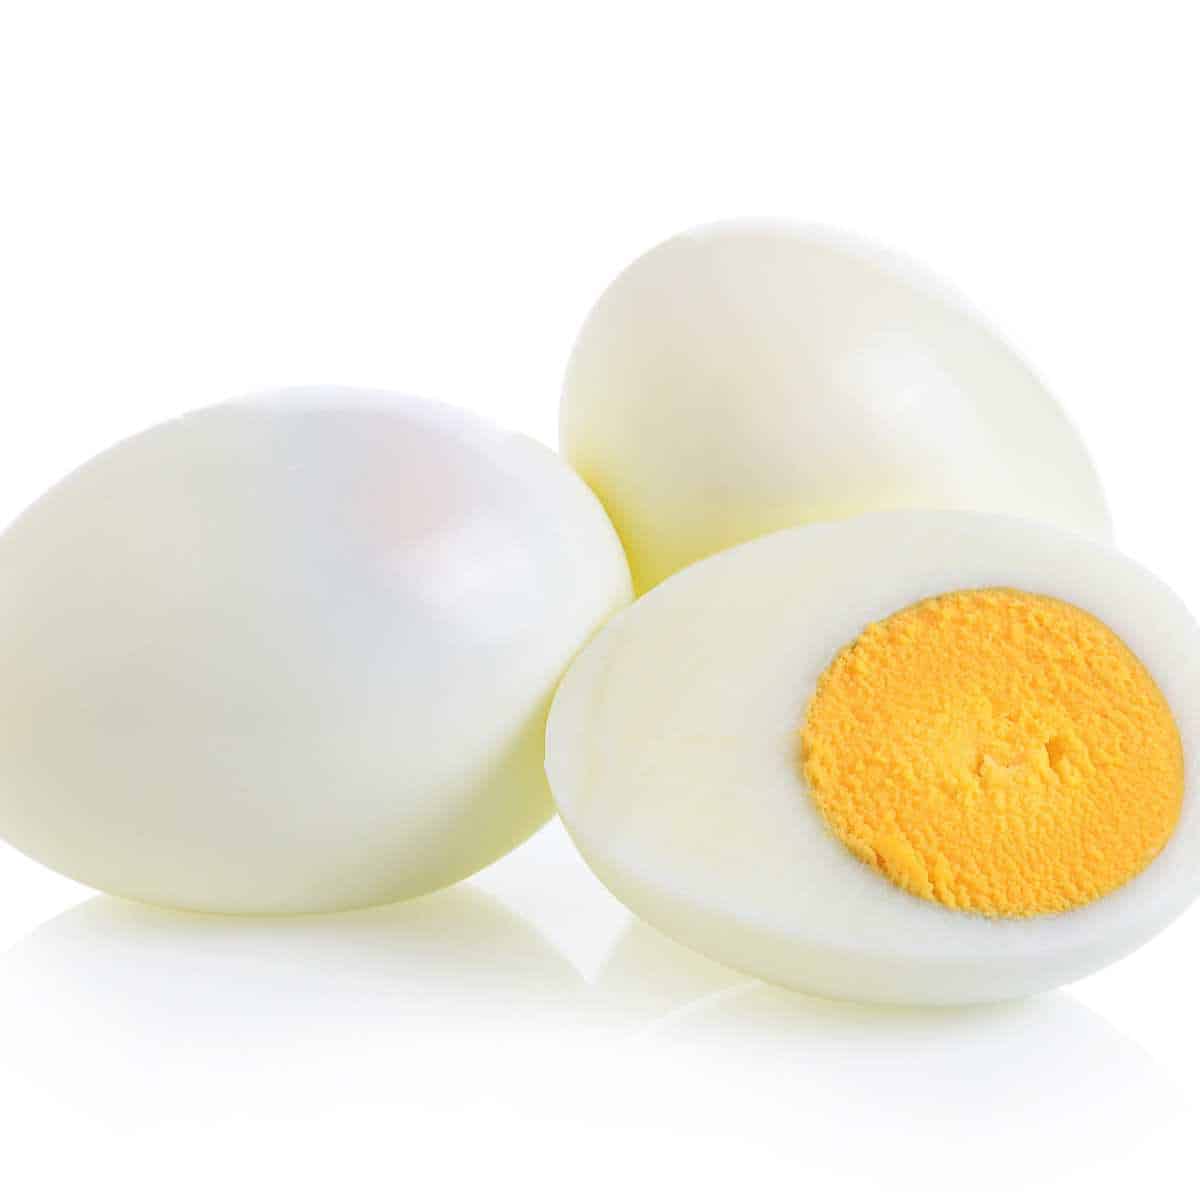 Hardboiled eggs on a white background.